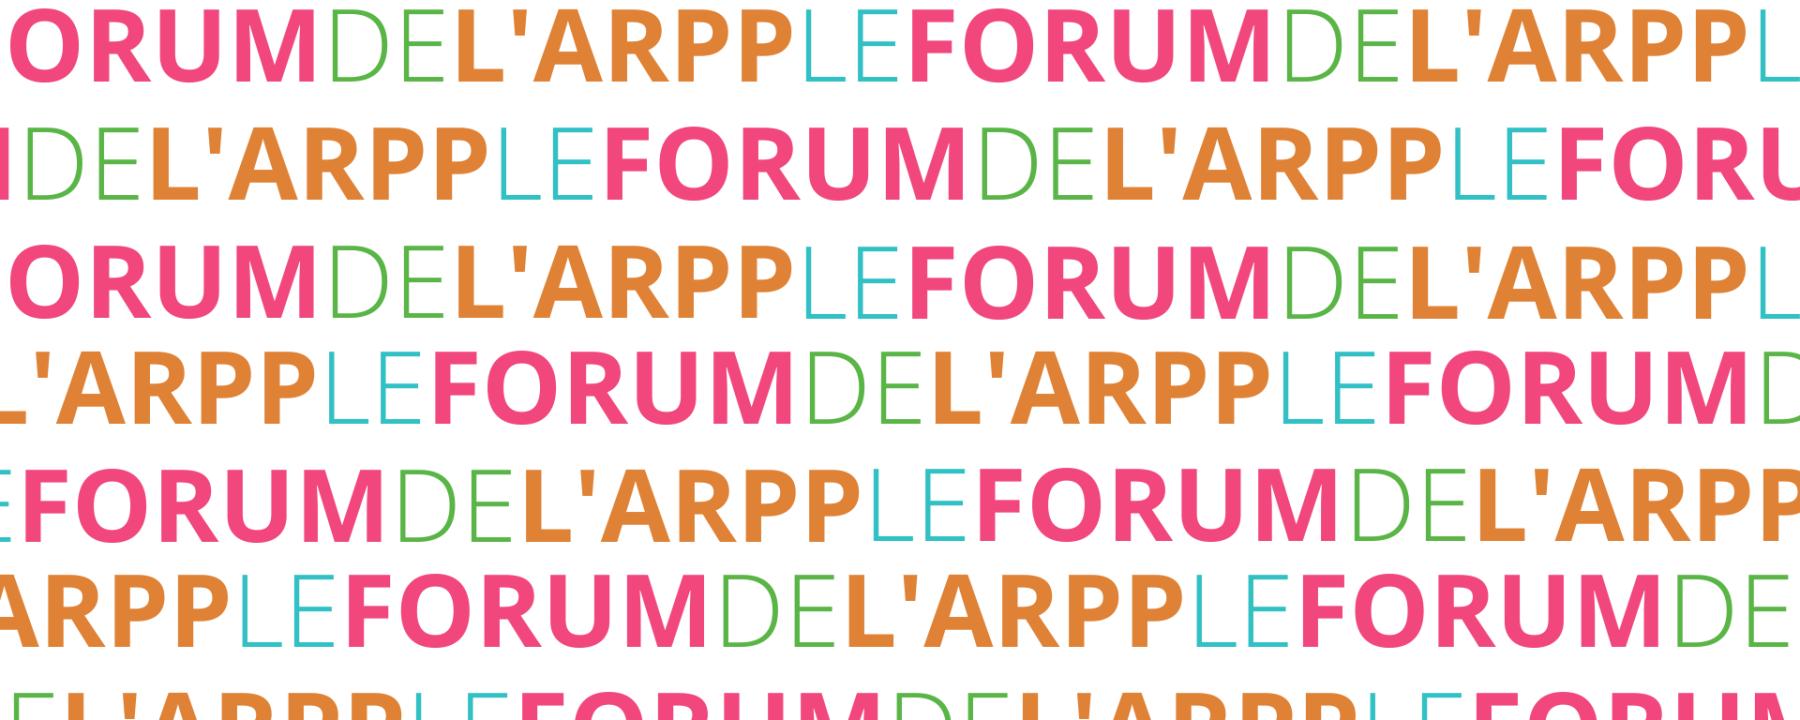 Forum de l'ARPP 